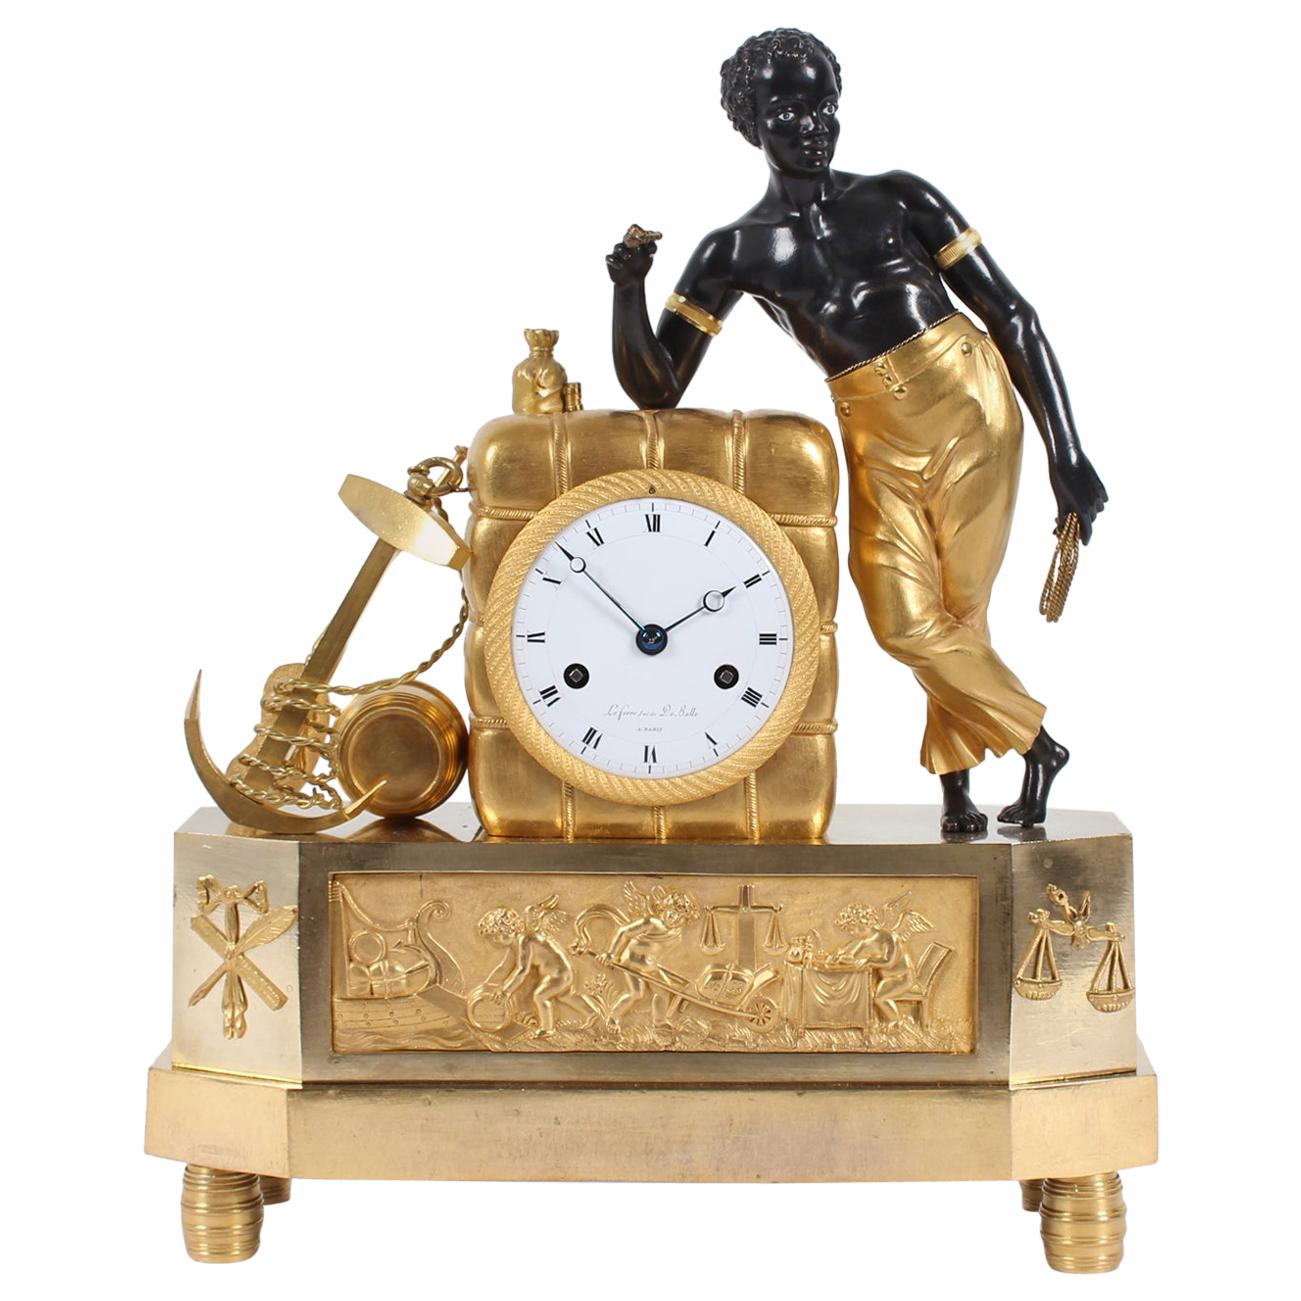 Early 19th Century French Firegilt Mantel Clock, Young Sailor, circa 1810